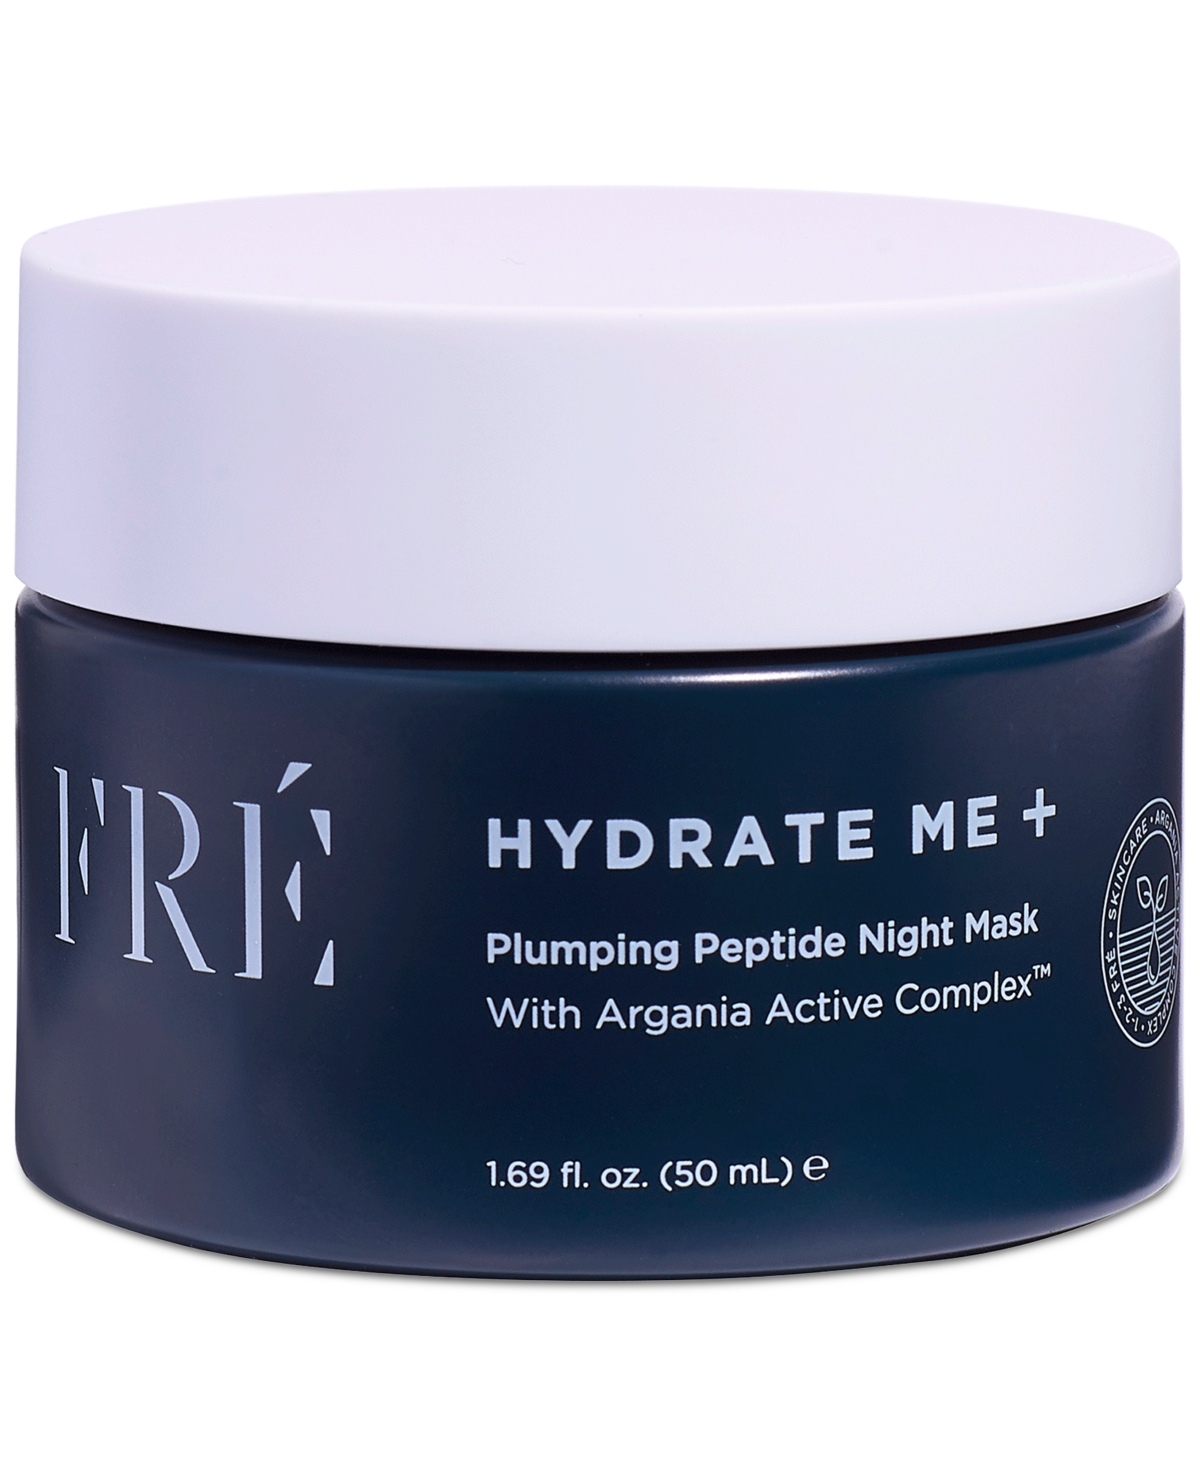 Hydrate Me + Plumping Peptide Night Mask - Light Pink